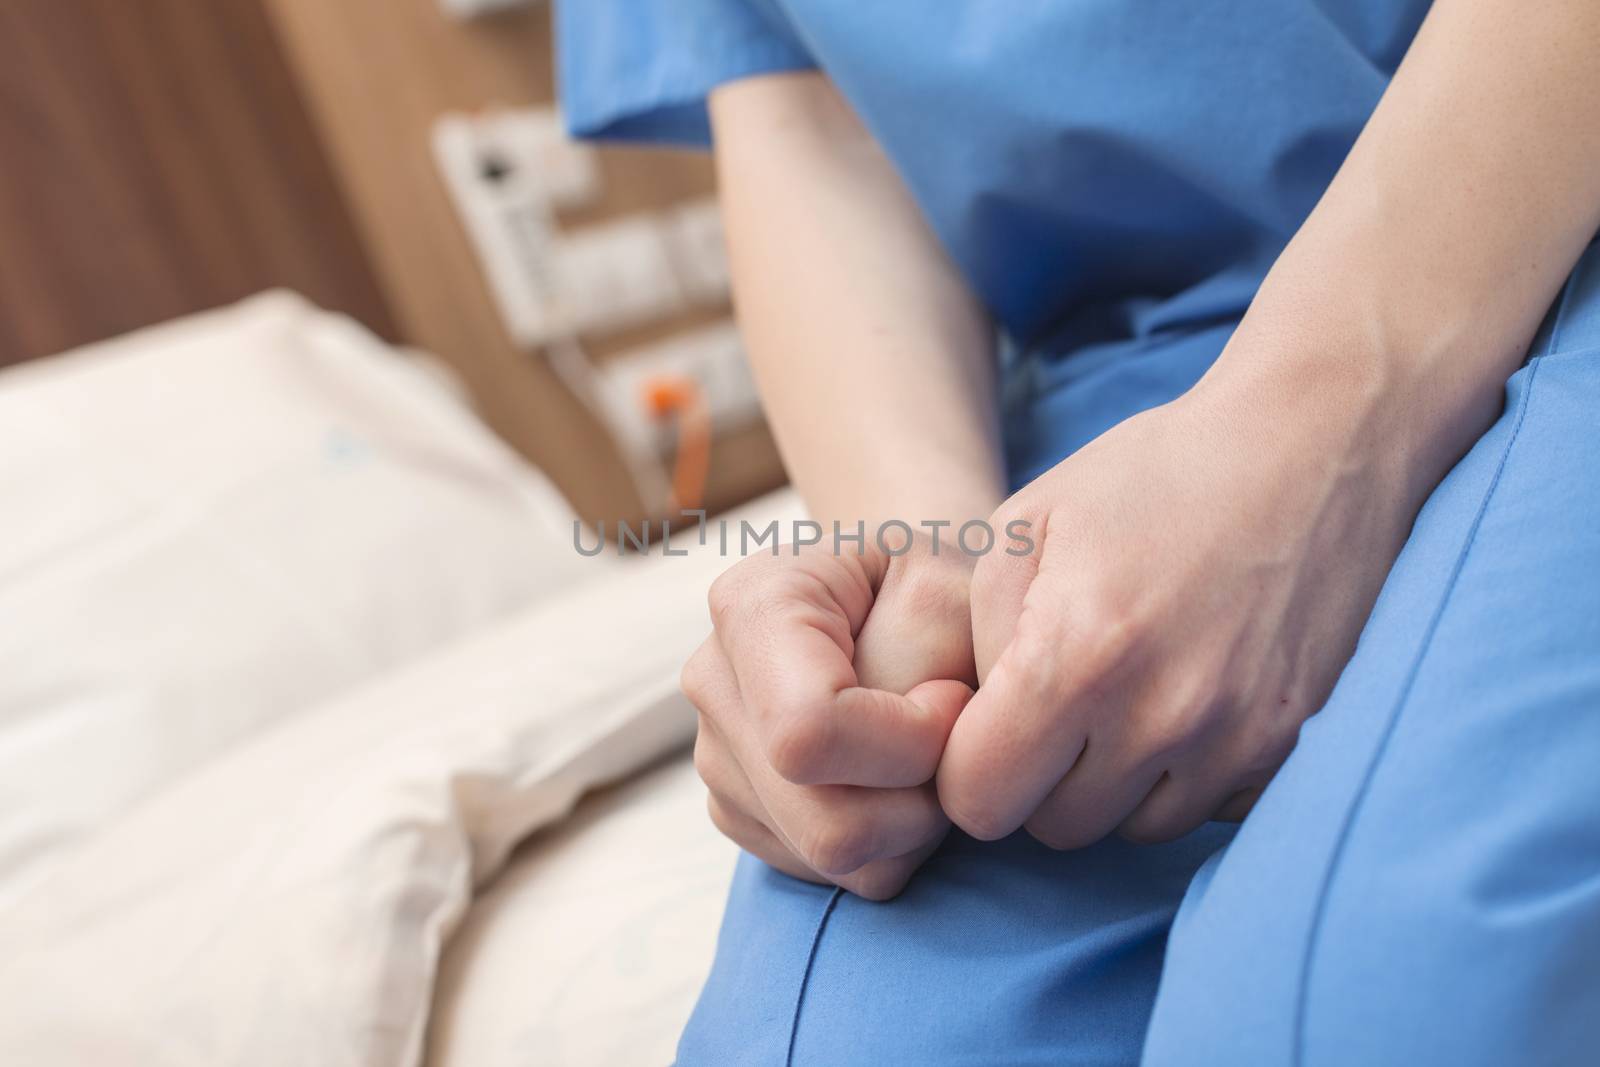 Hospital patient hands hope by vilevi